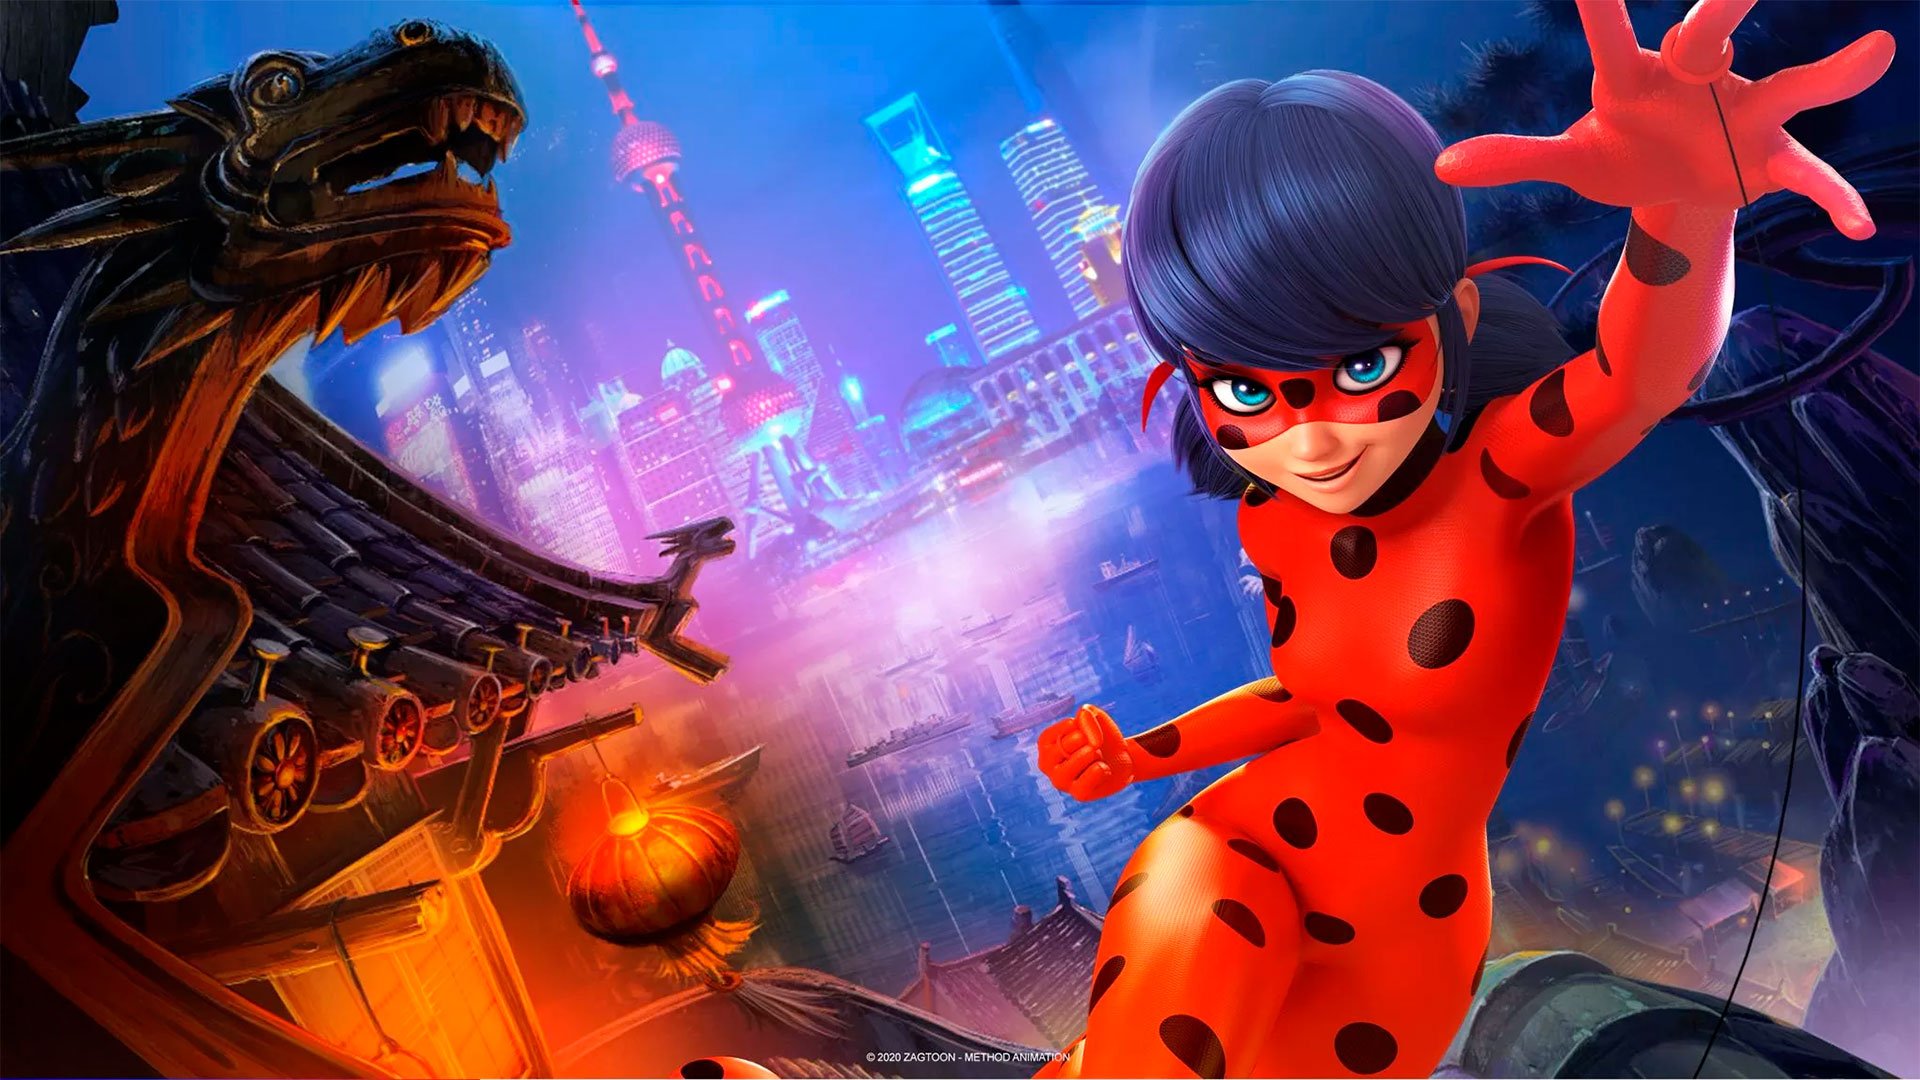 Nova saga de Ladybug na China, “Miraculous World: Xangai” estreia no  Telecine